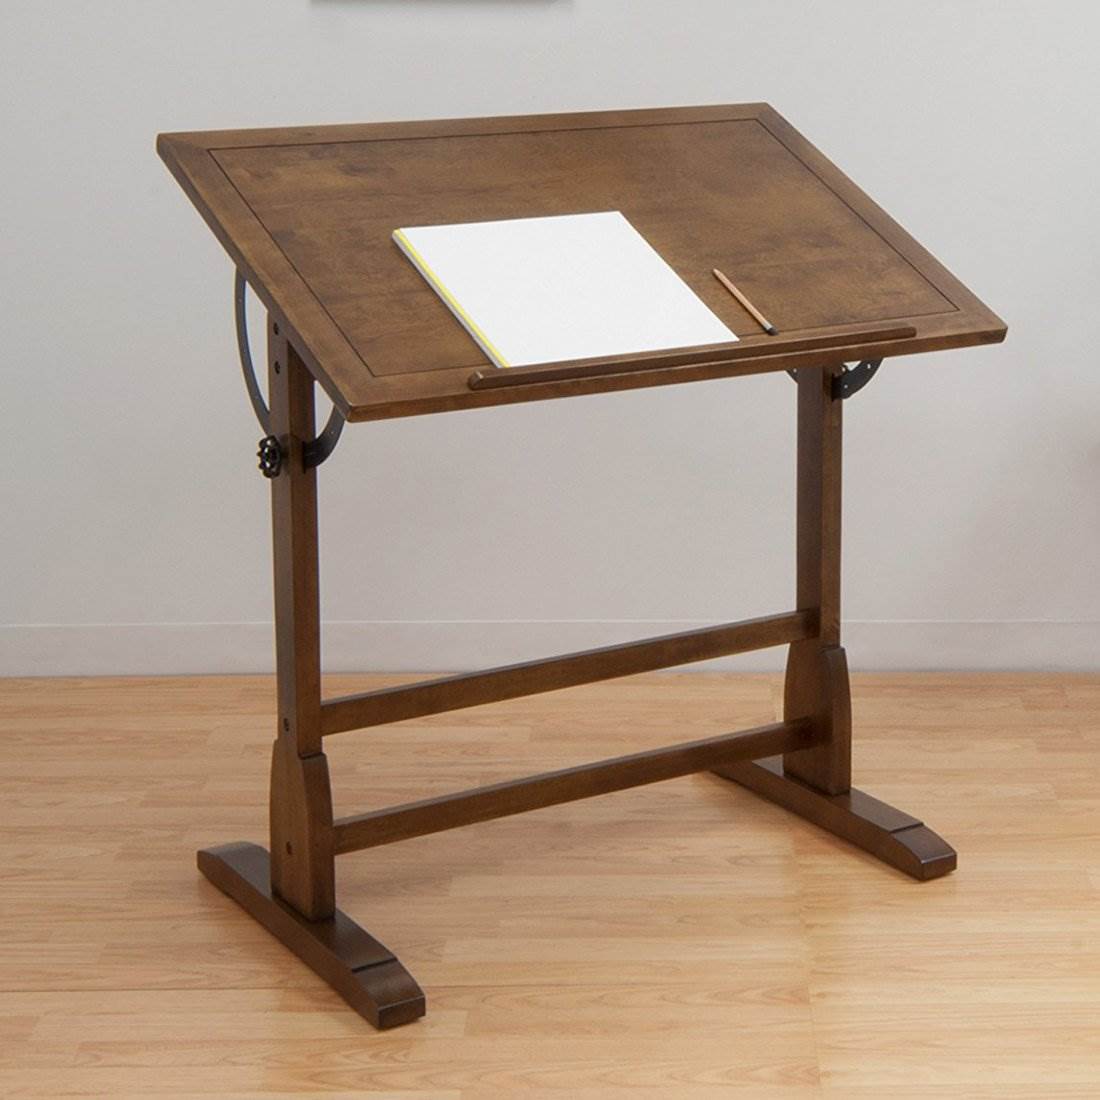 Studio Designs 36 X 24-inch Vintage Drafting Table Rustic Oak for sale online 